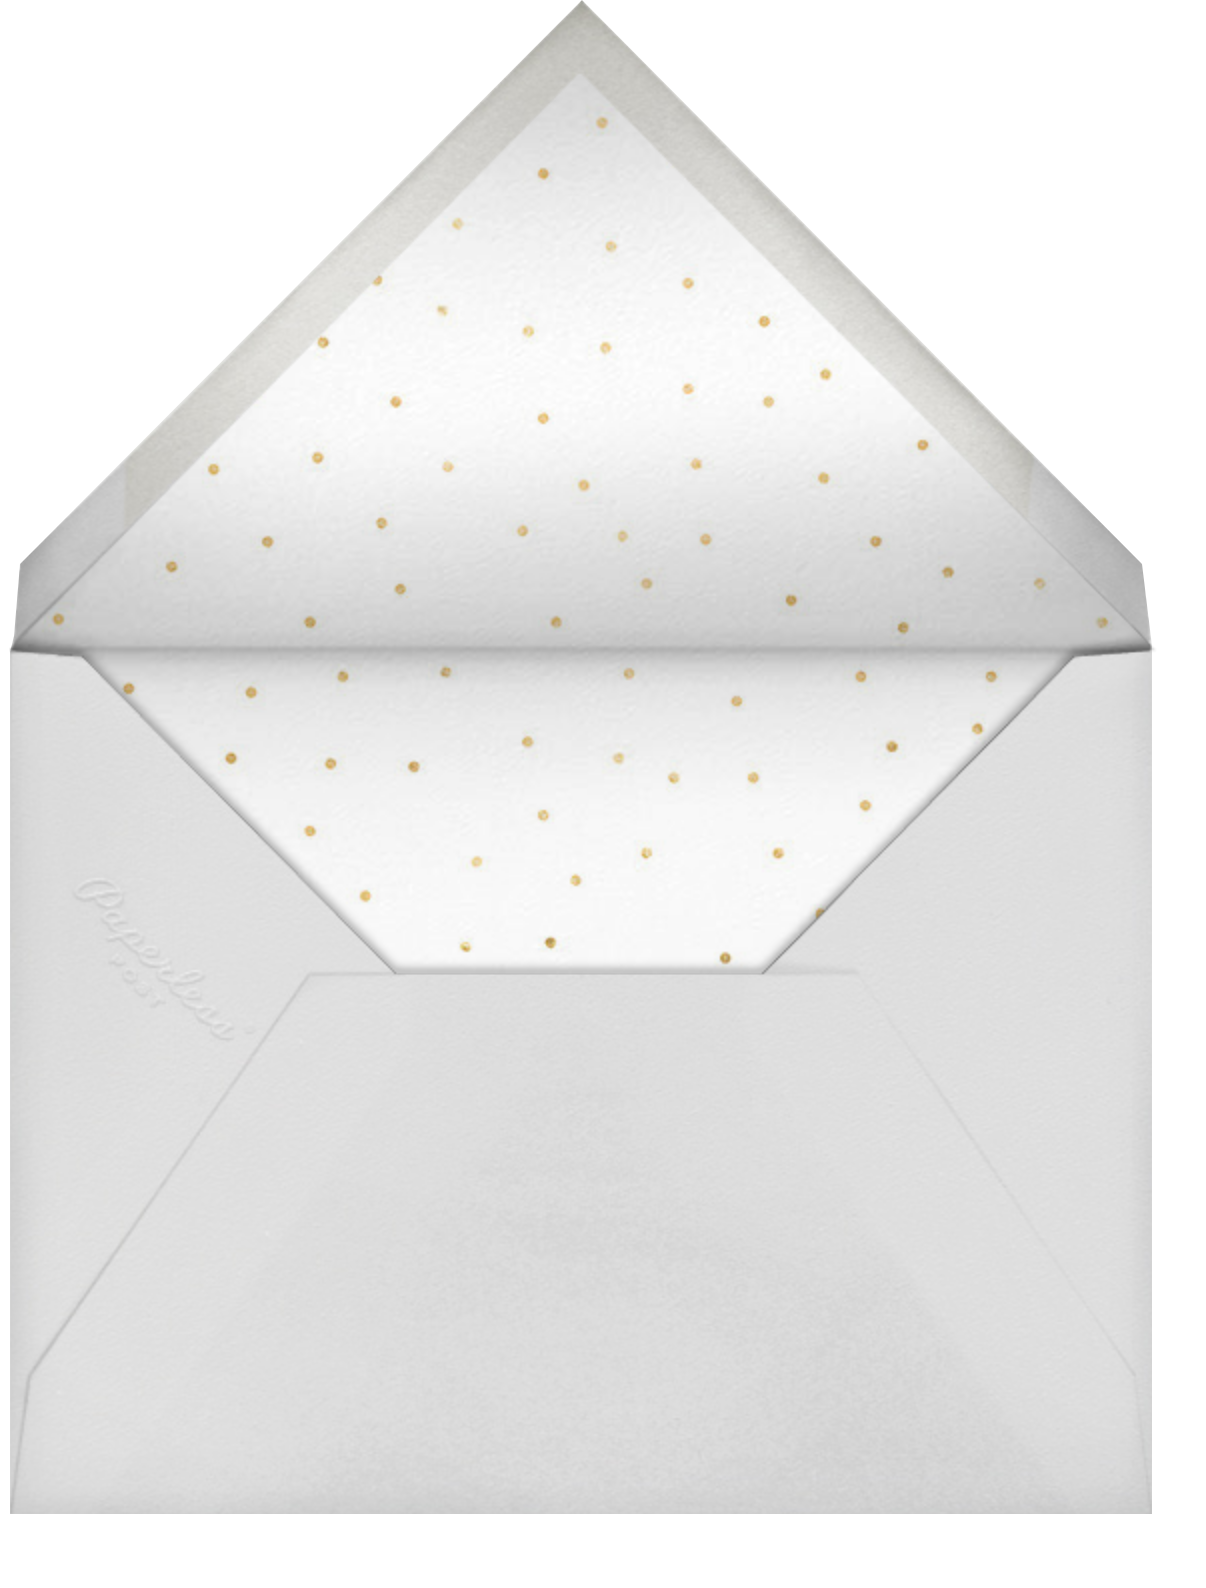 Chimney Smoke - Cheree Berry Paper & Design - Envelope